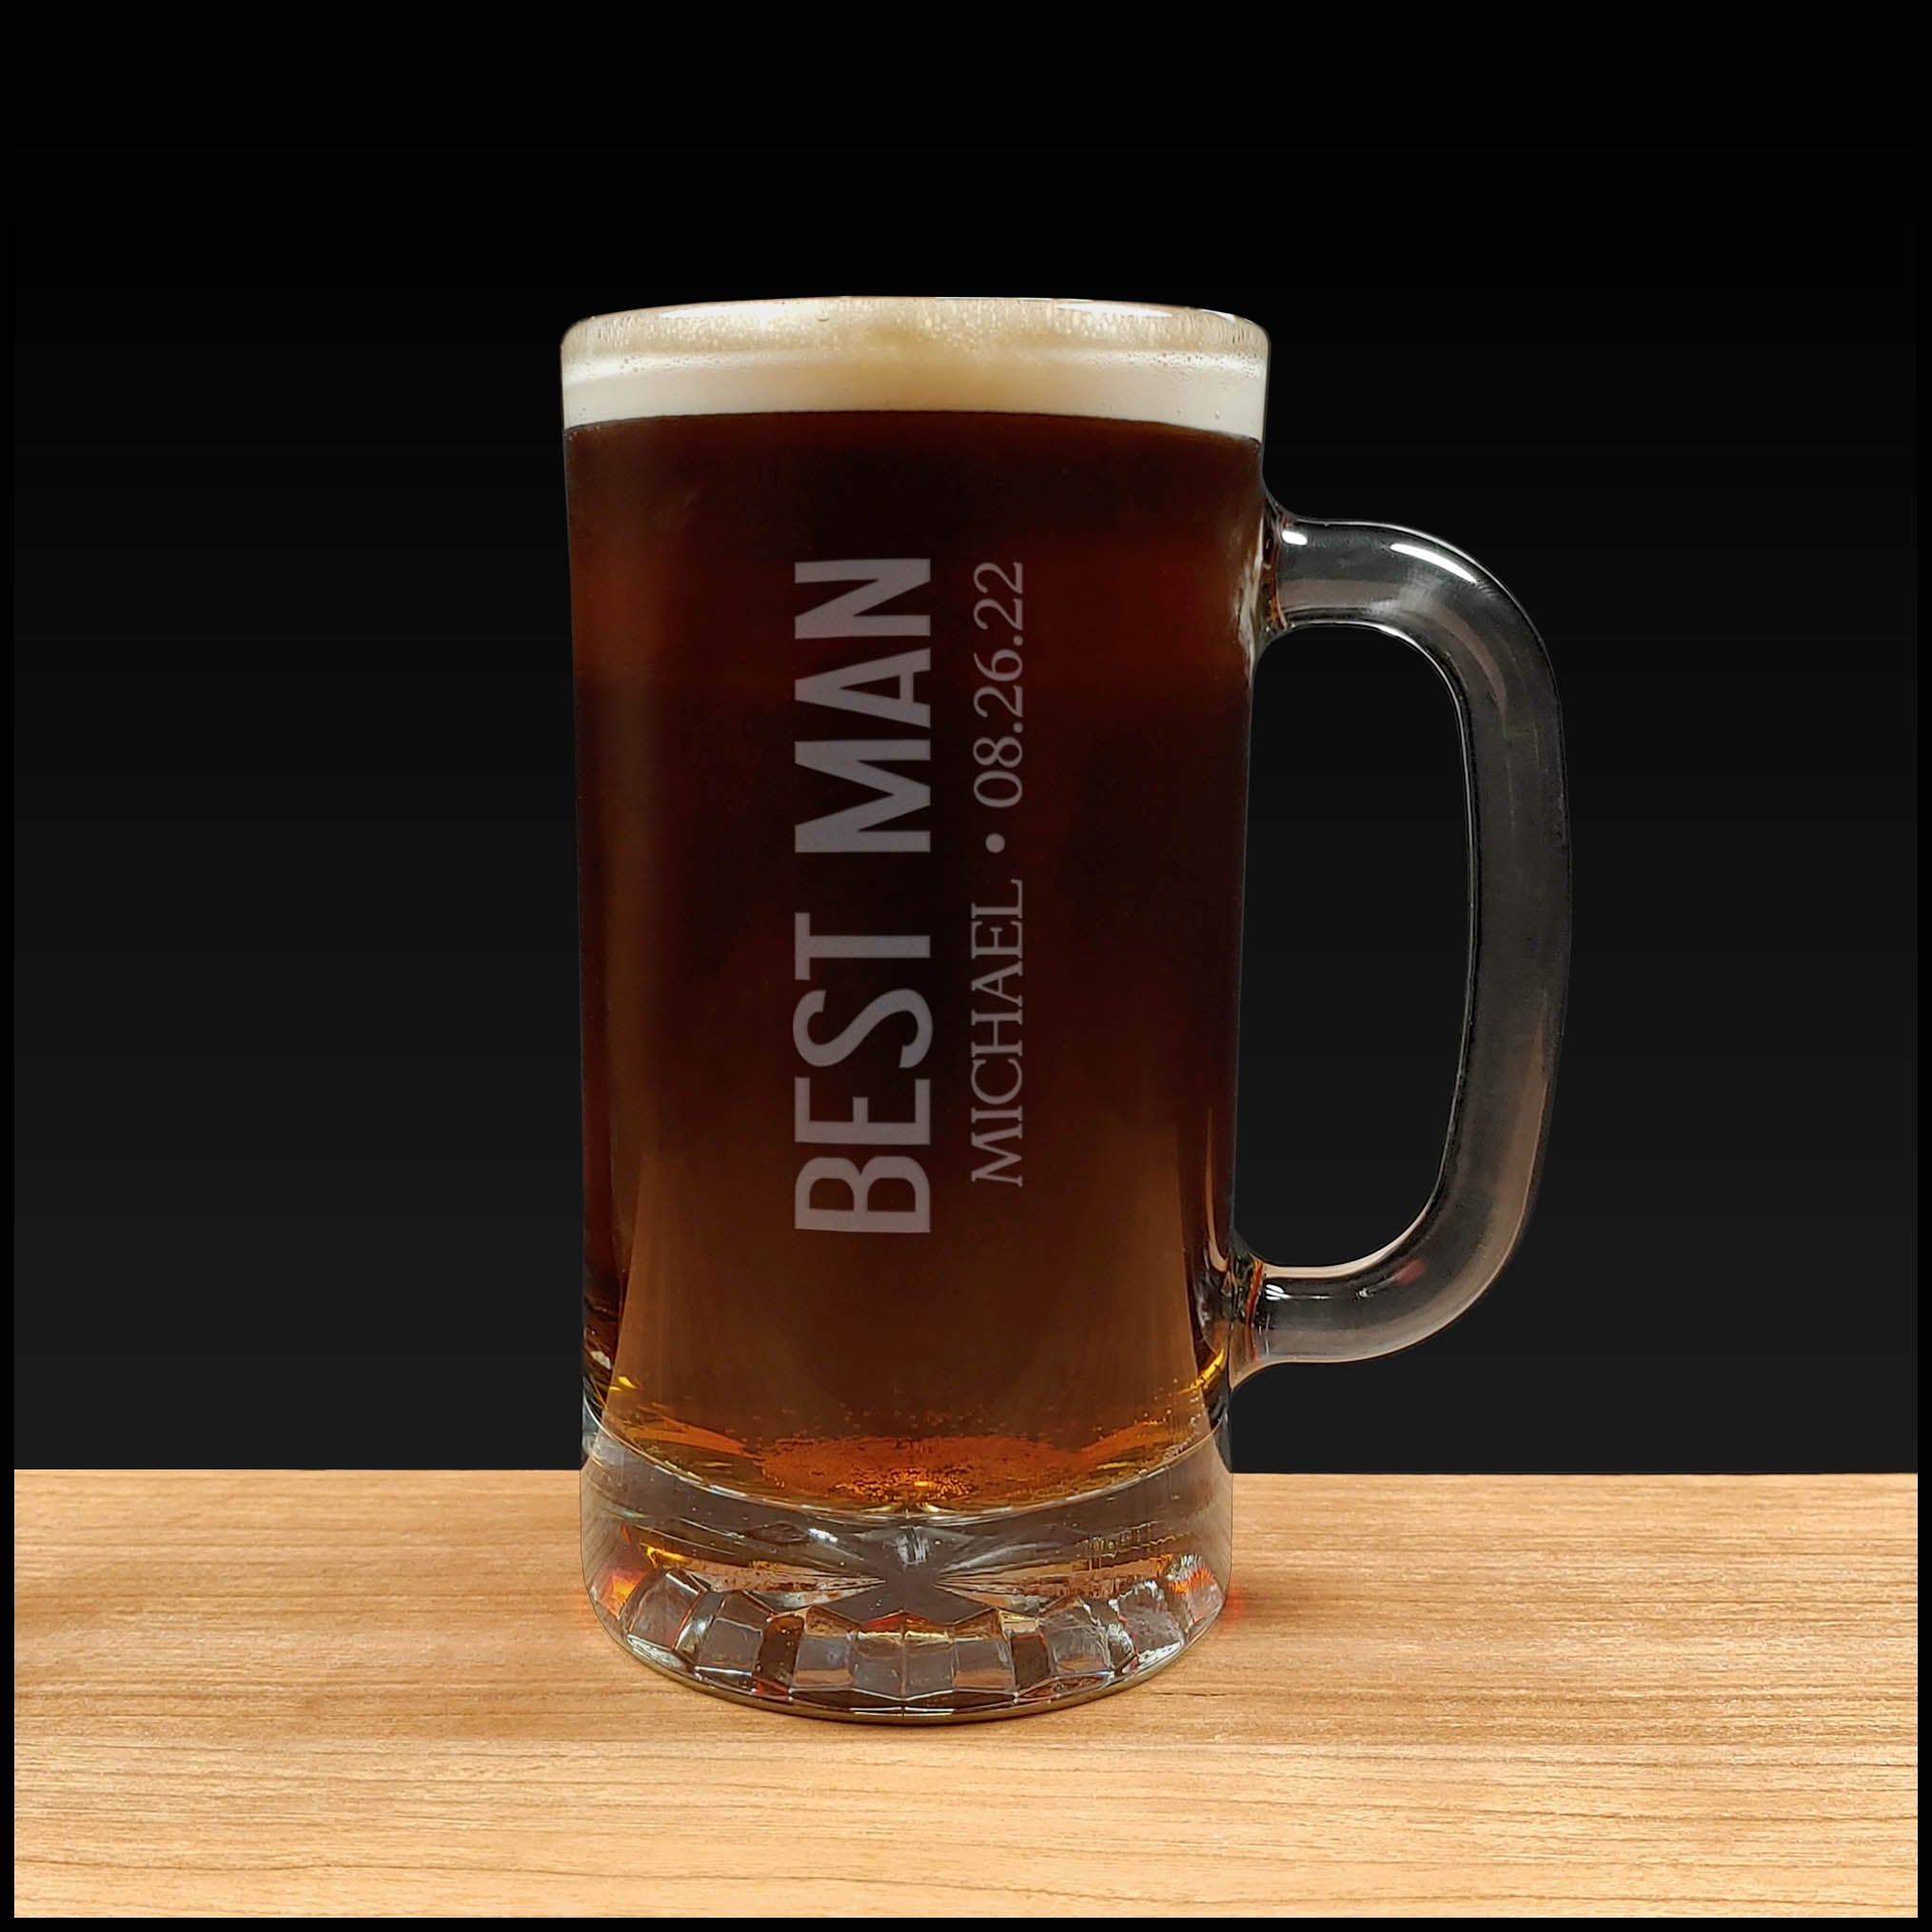 Best Man Tuxedo Beer Mug design - Dark Beer - Copyright Hues in Glass